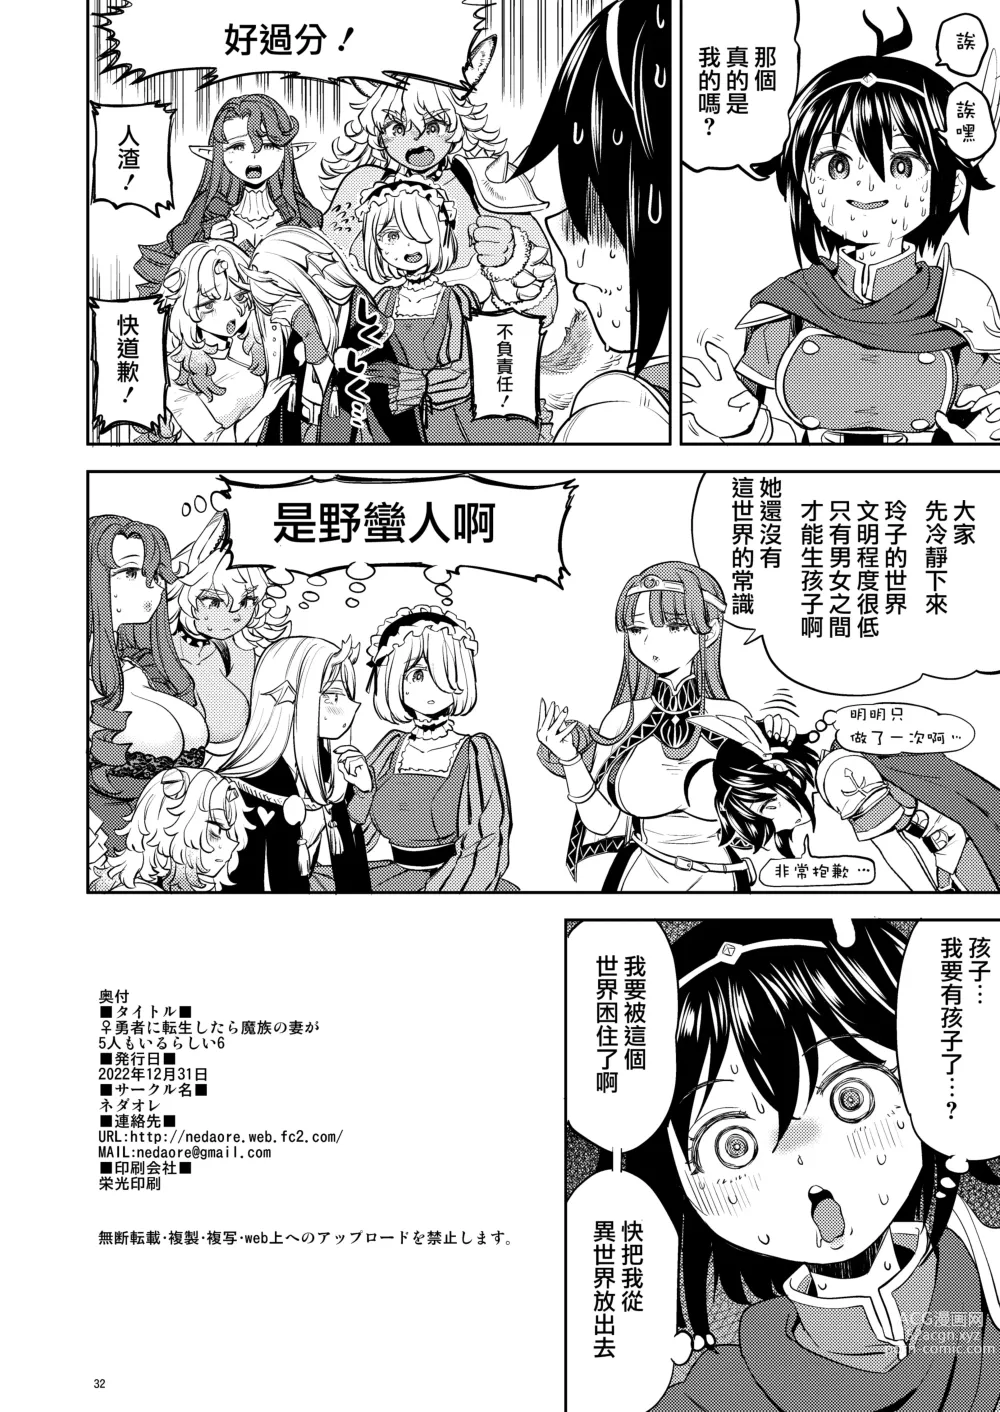 Page 234 of manga 我轉生成爲女勇者后魔族的妻子居然有5人 1-6